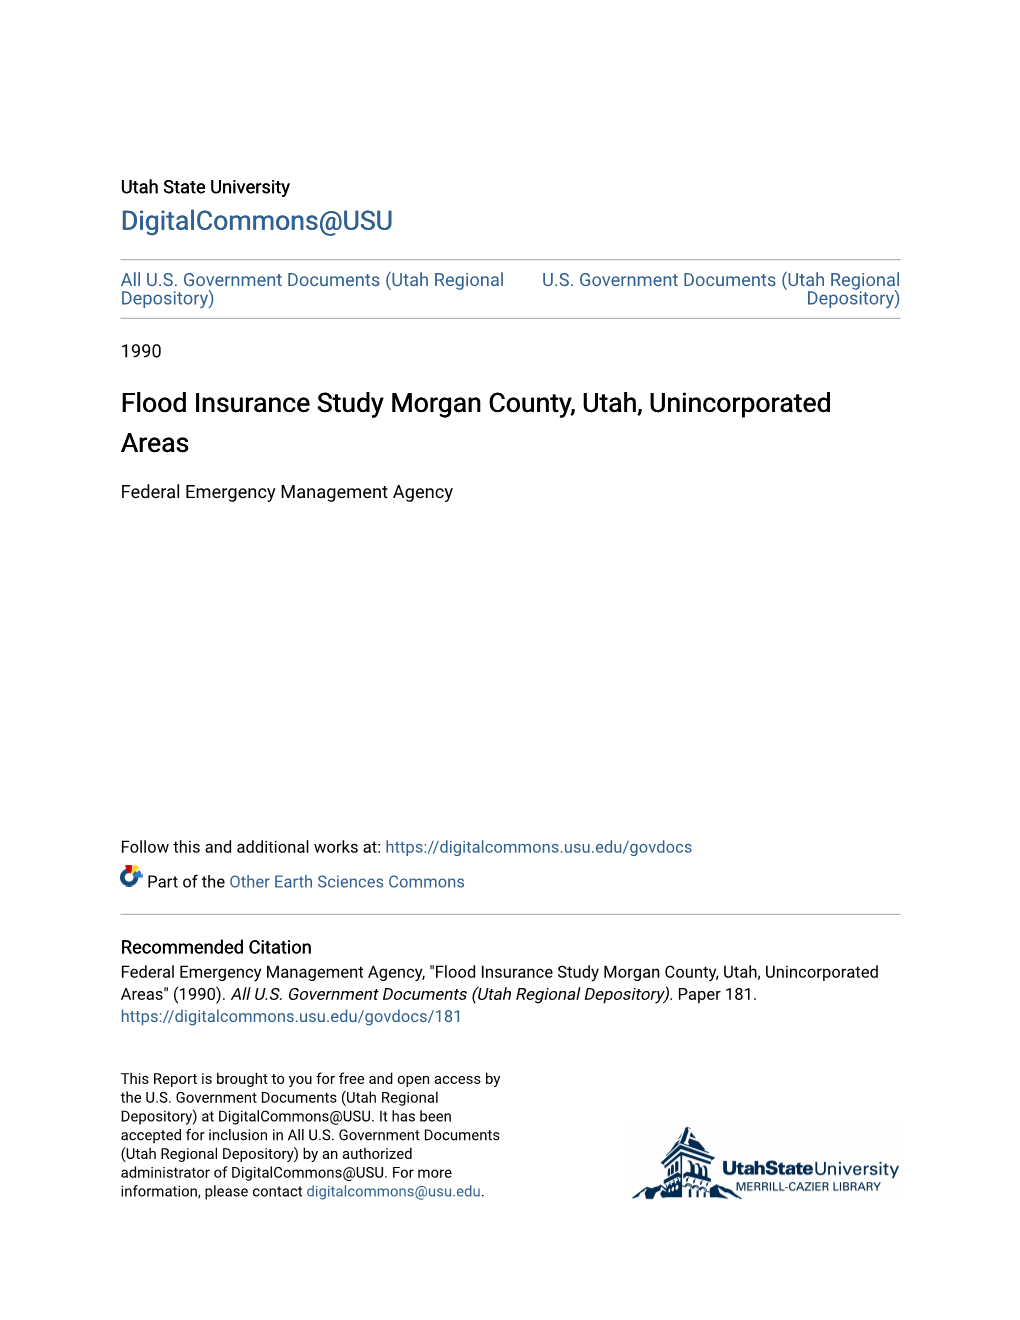 Flood Insurance Study Morgan County, Utah, Unincorporated Areas